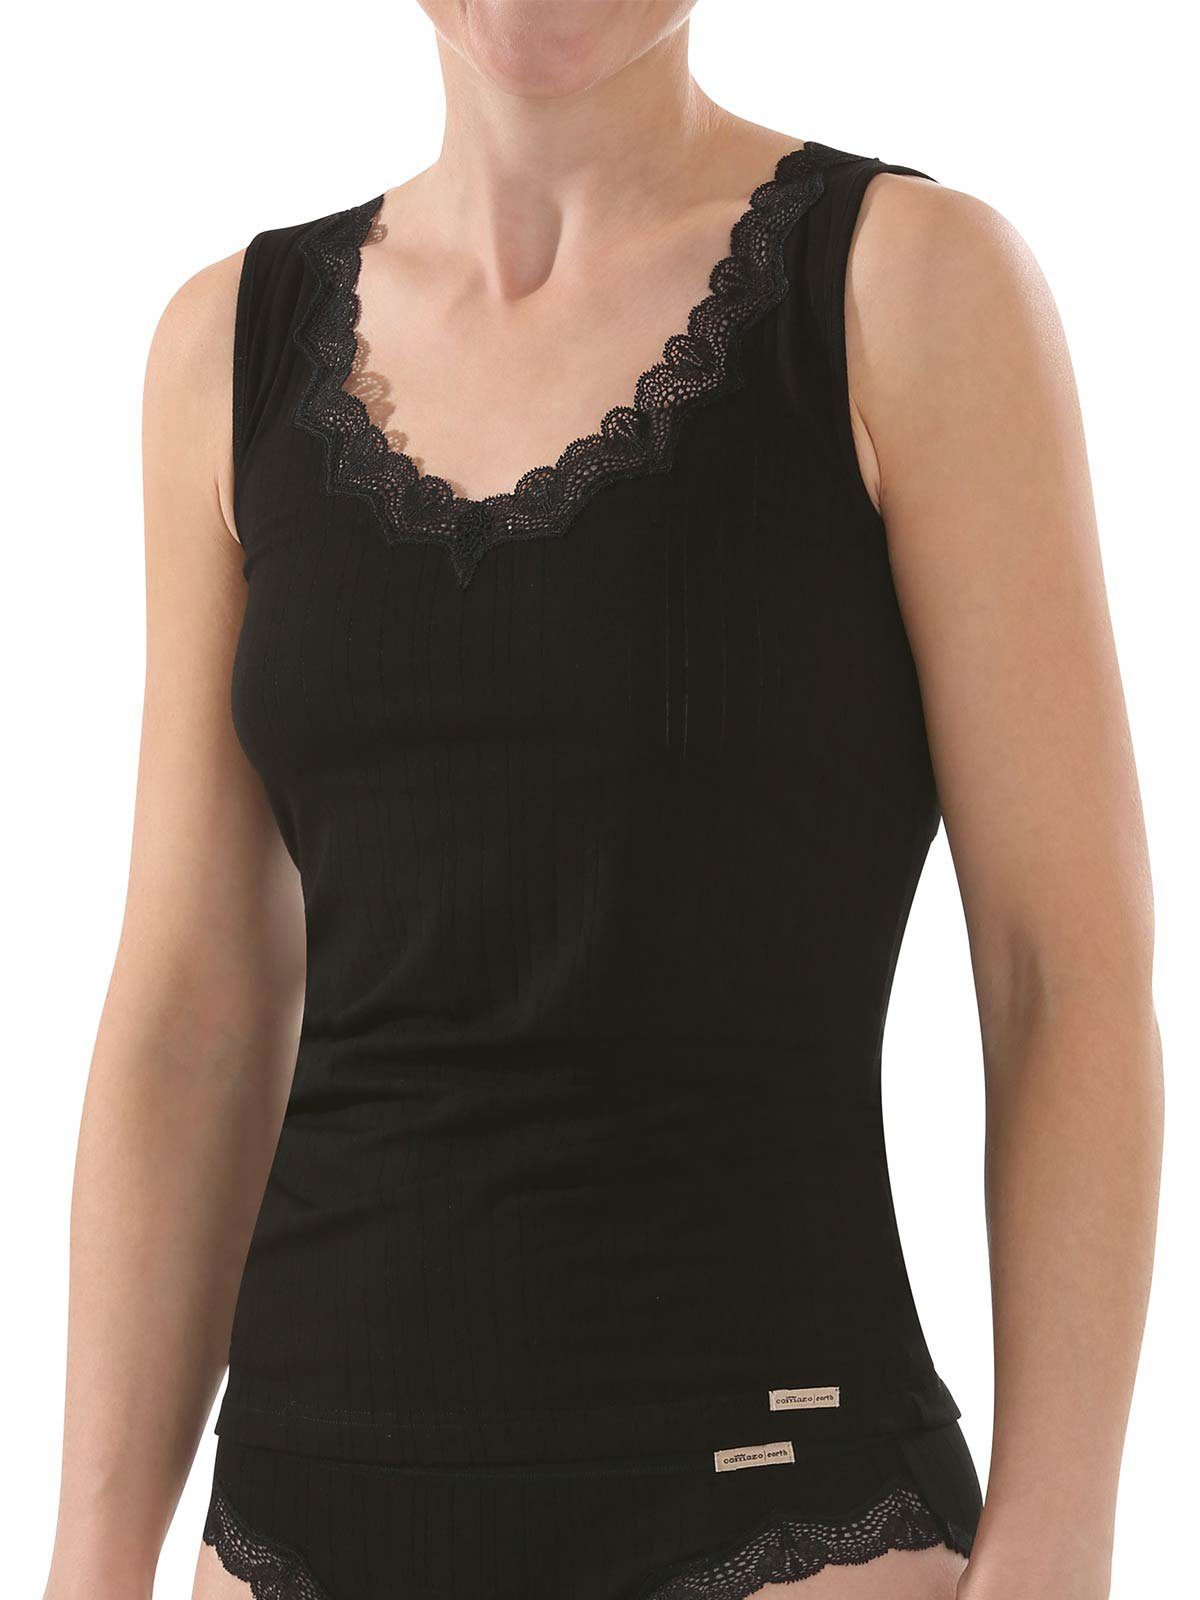 COMAZO Achselhemd Damen Baumwoll Achselträgerhemd (Stück, 1-St) Vegan schwarz | Ärmellose Unterhemden